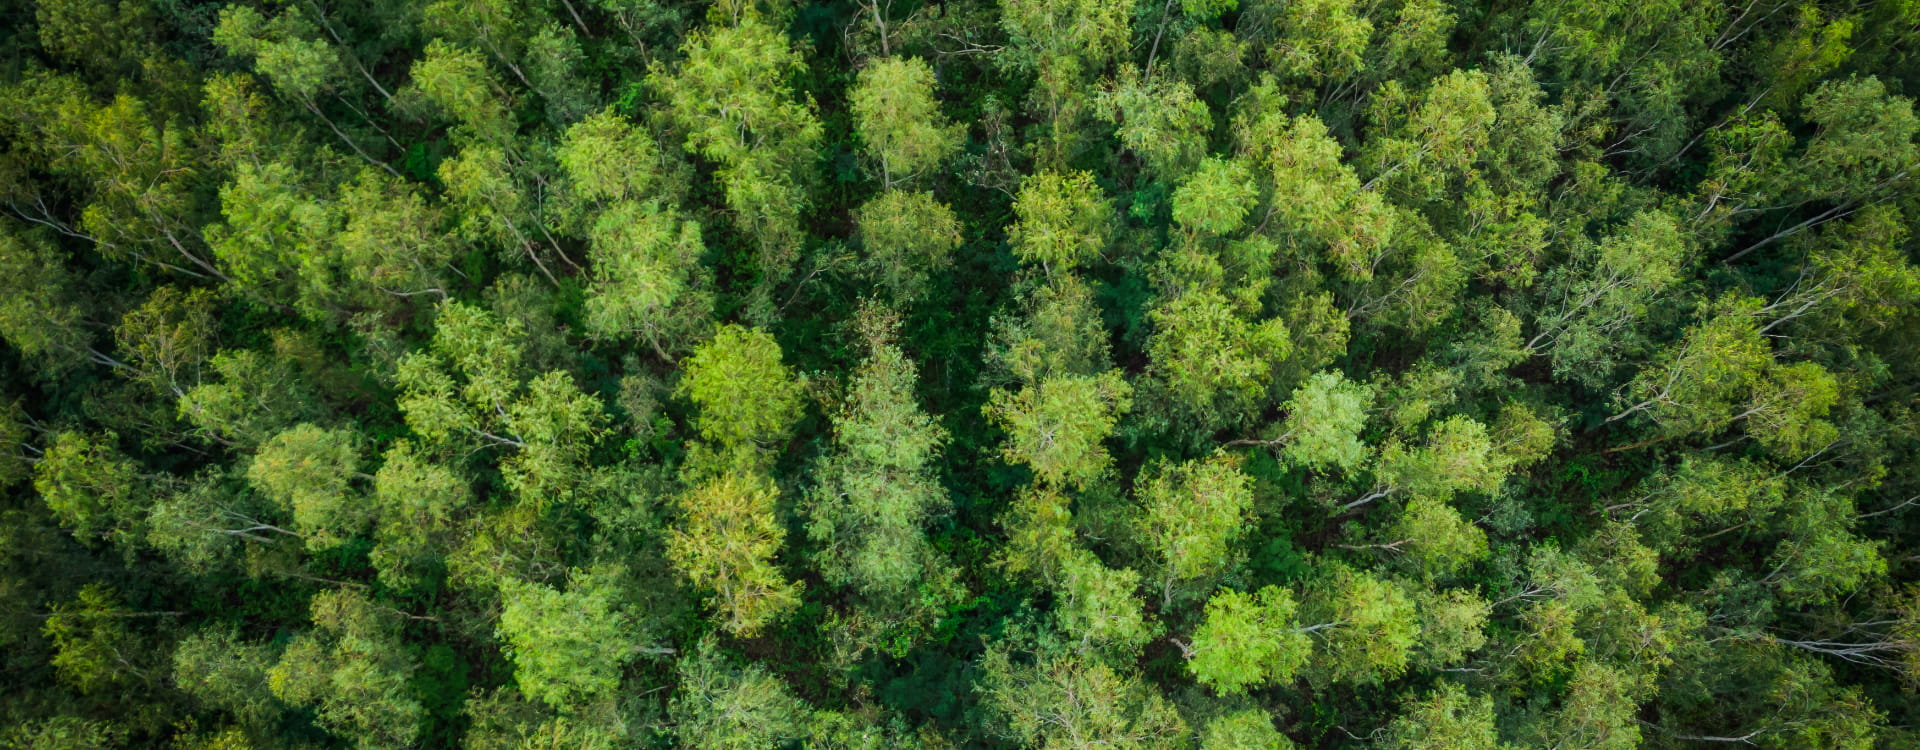 Vista aérea de un bosque verde